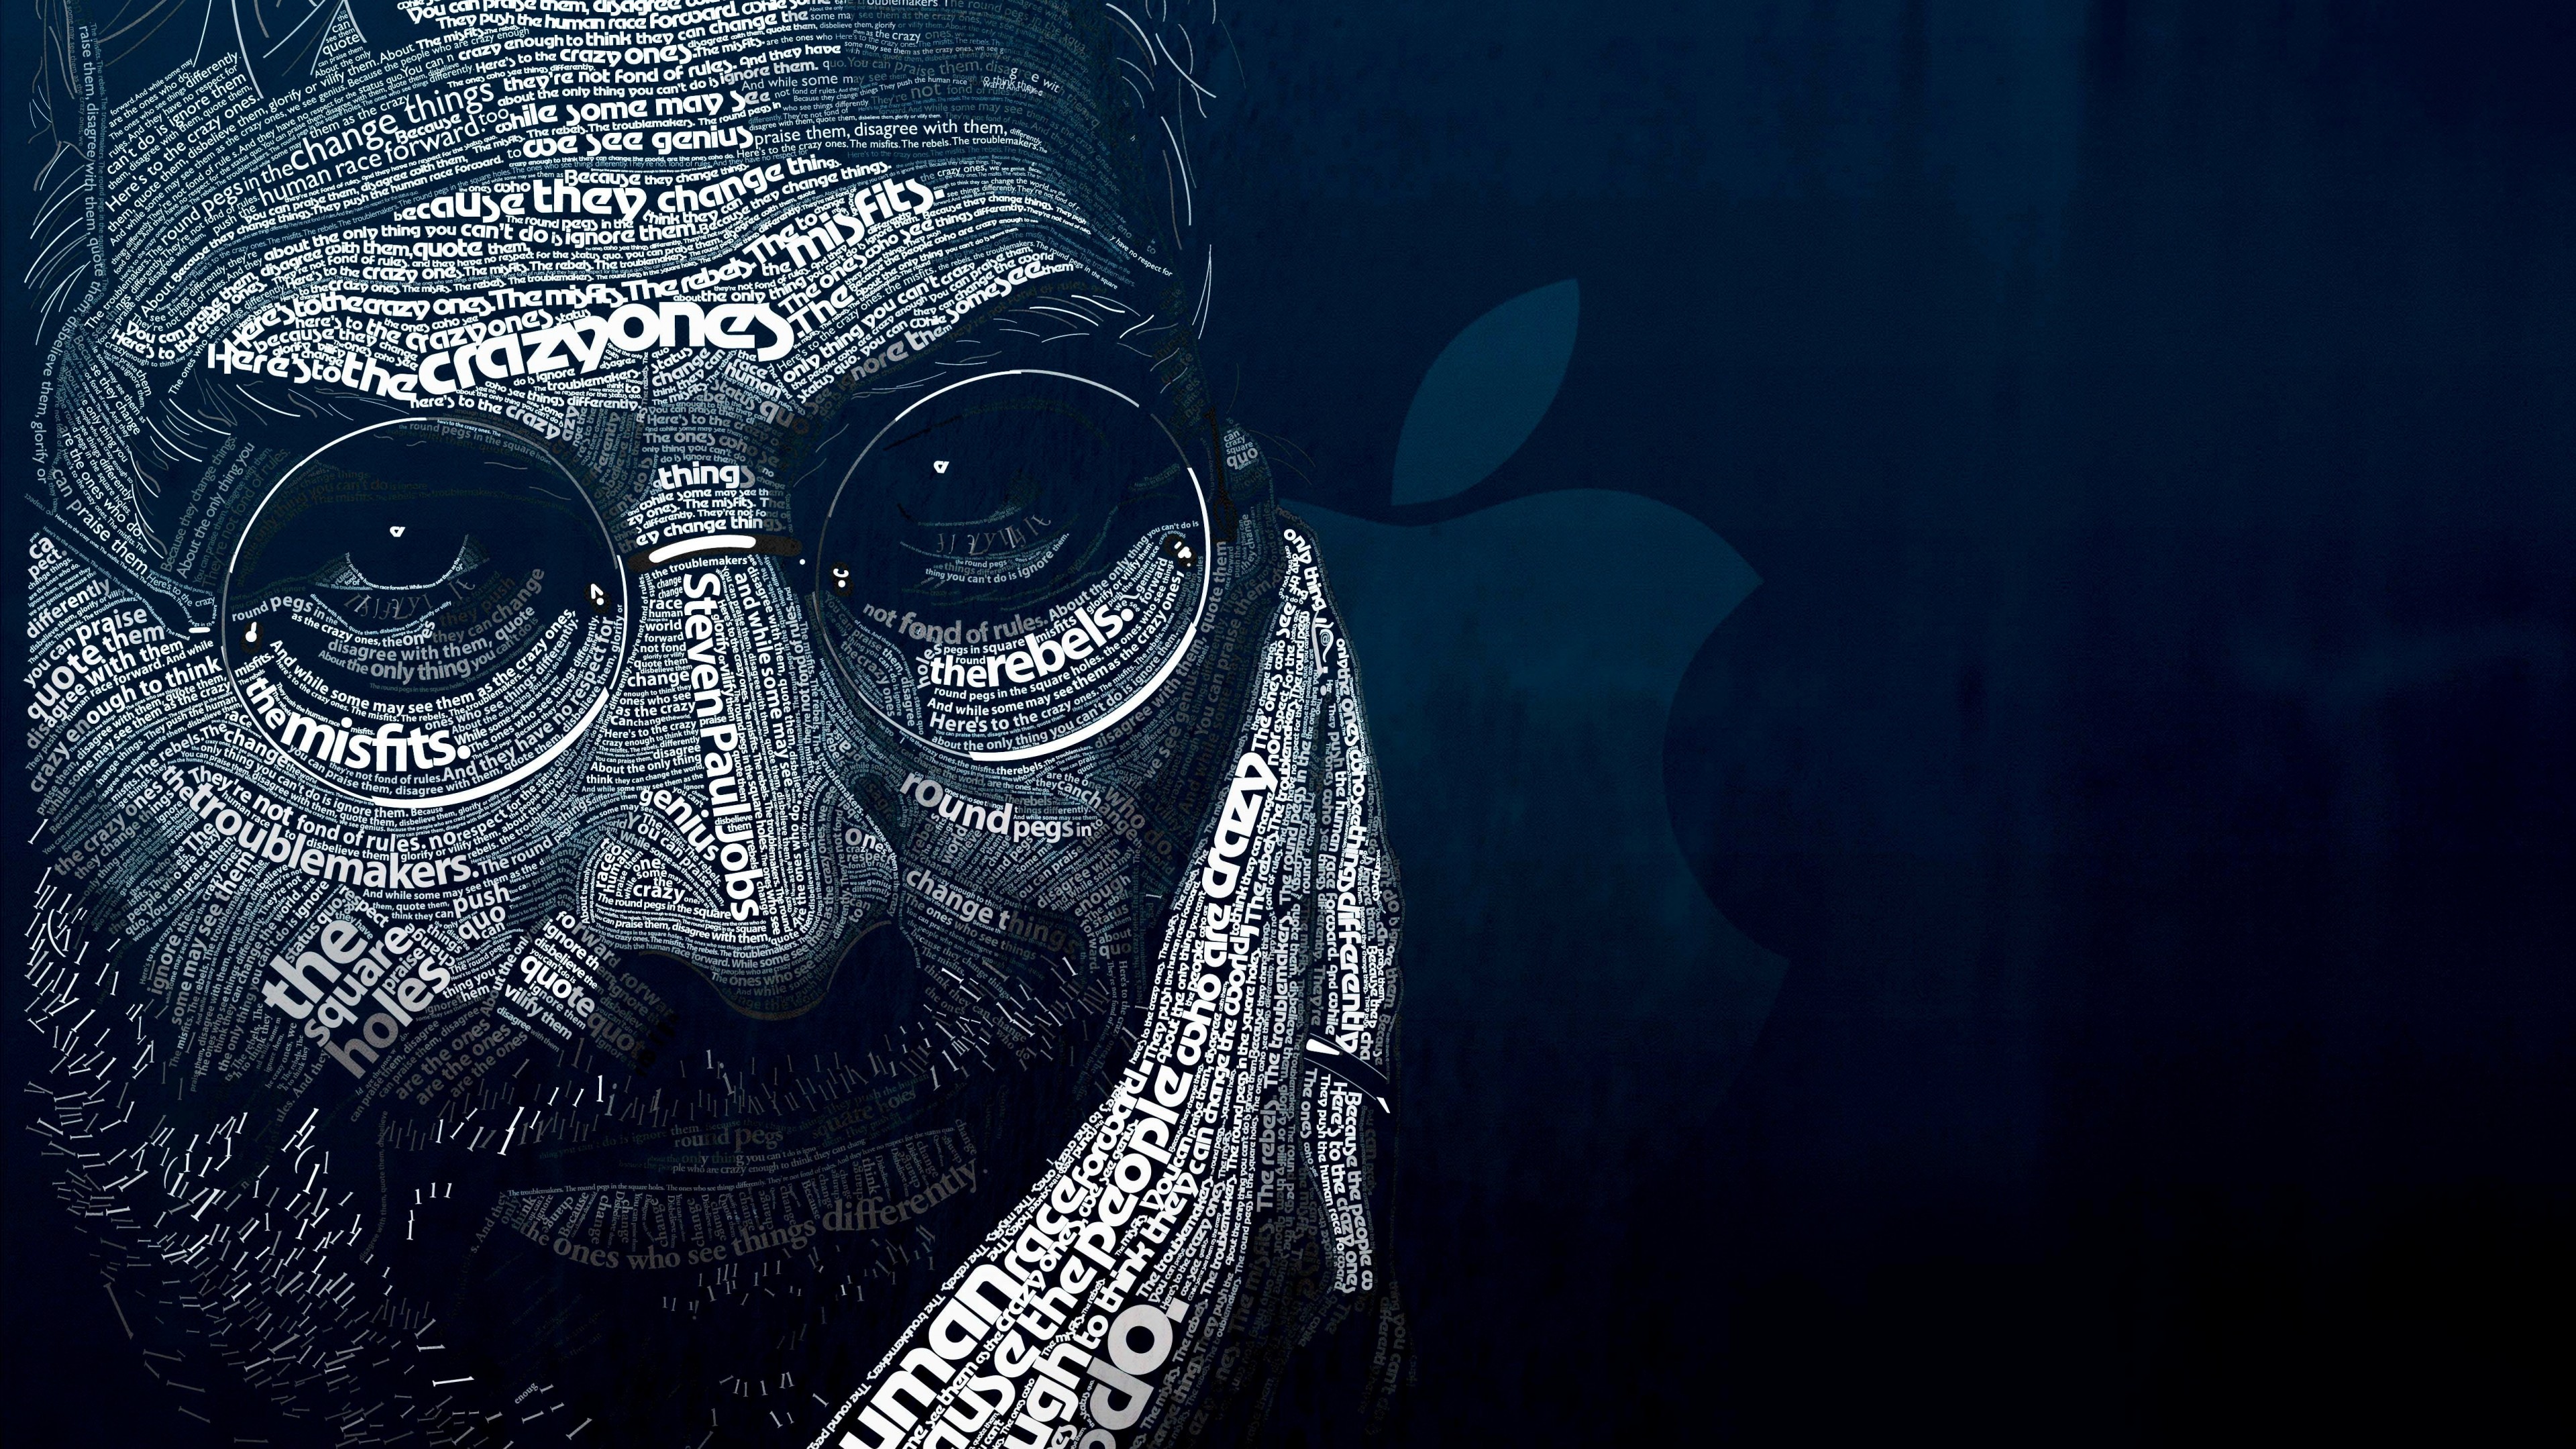 Steve Jobs Typographic Portrait Wallpaper - Steve Jobs Word - HD Wallpaper 